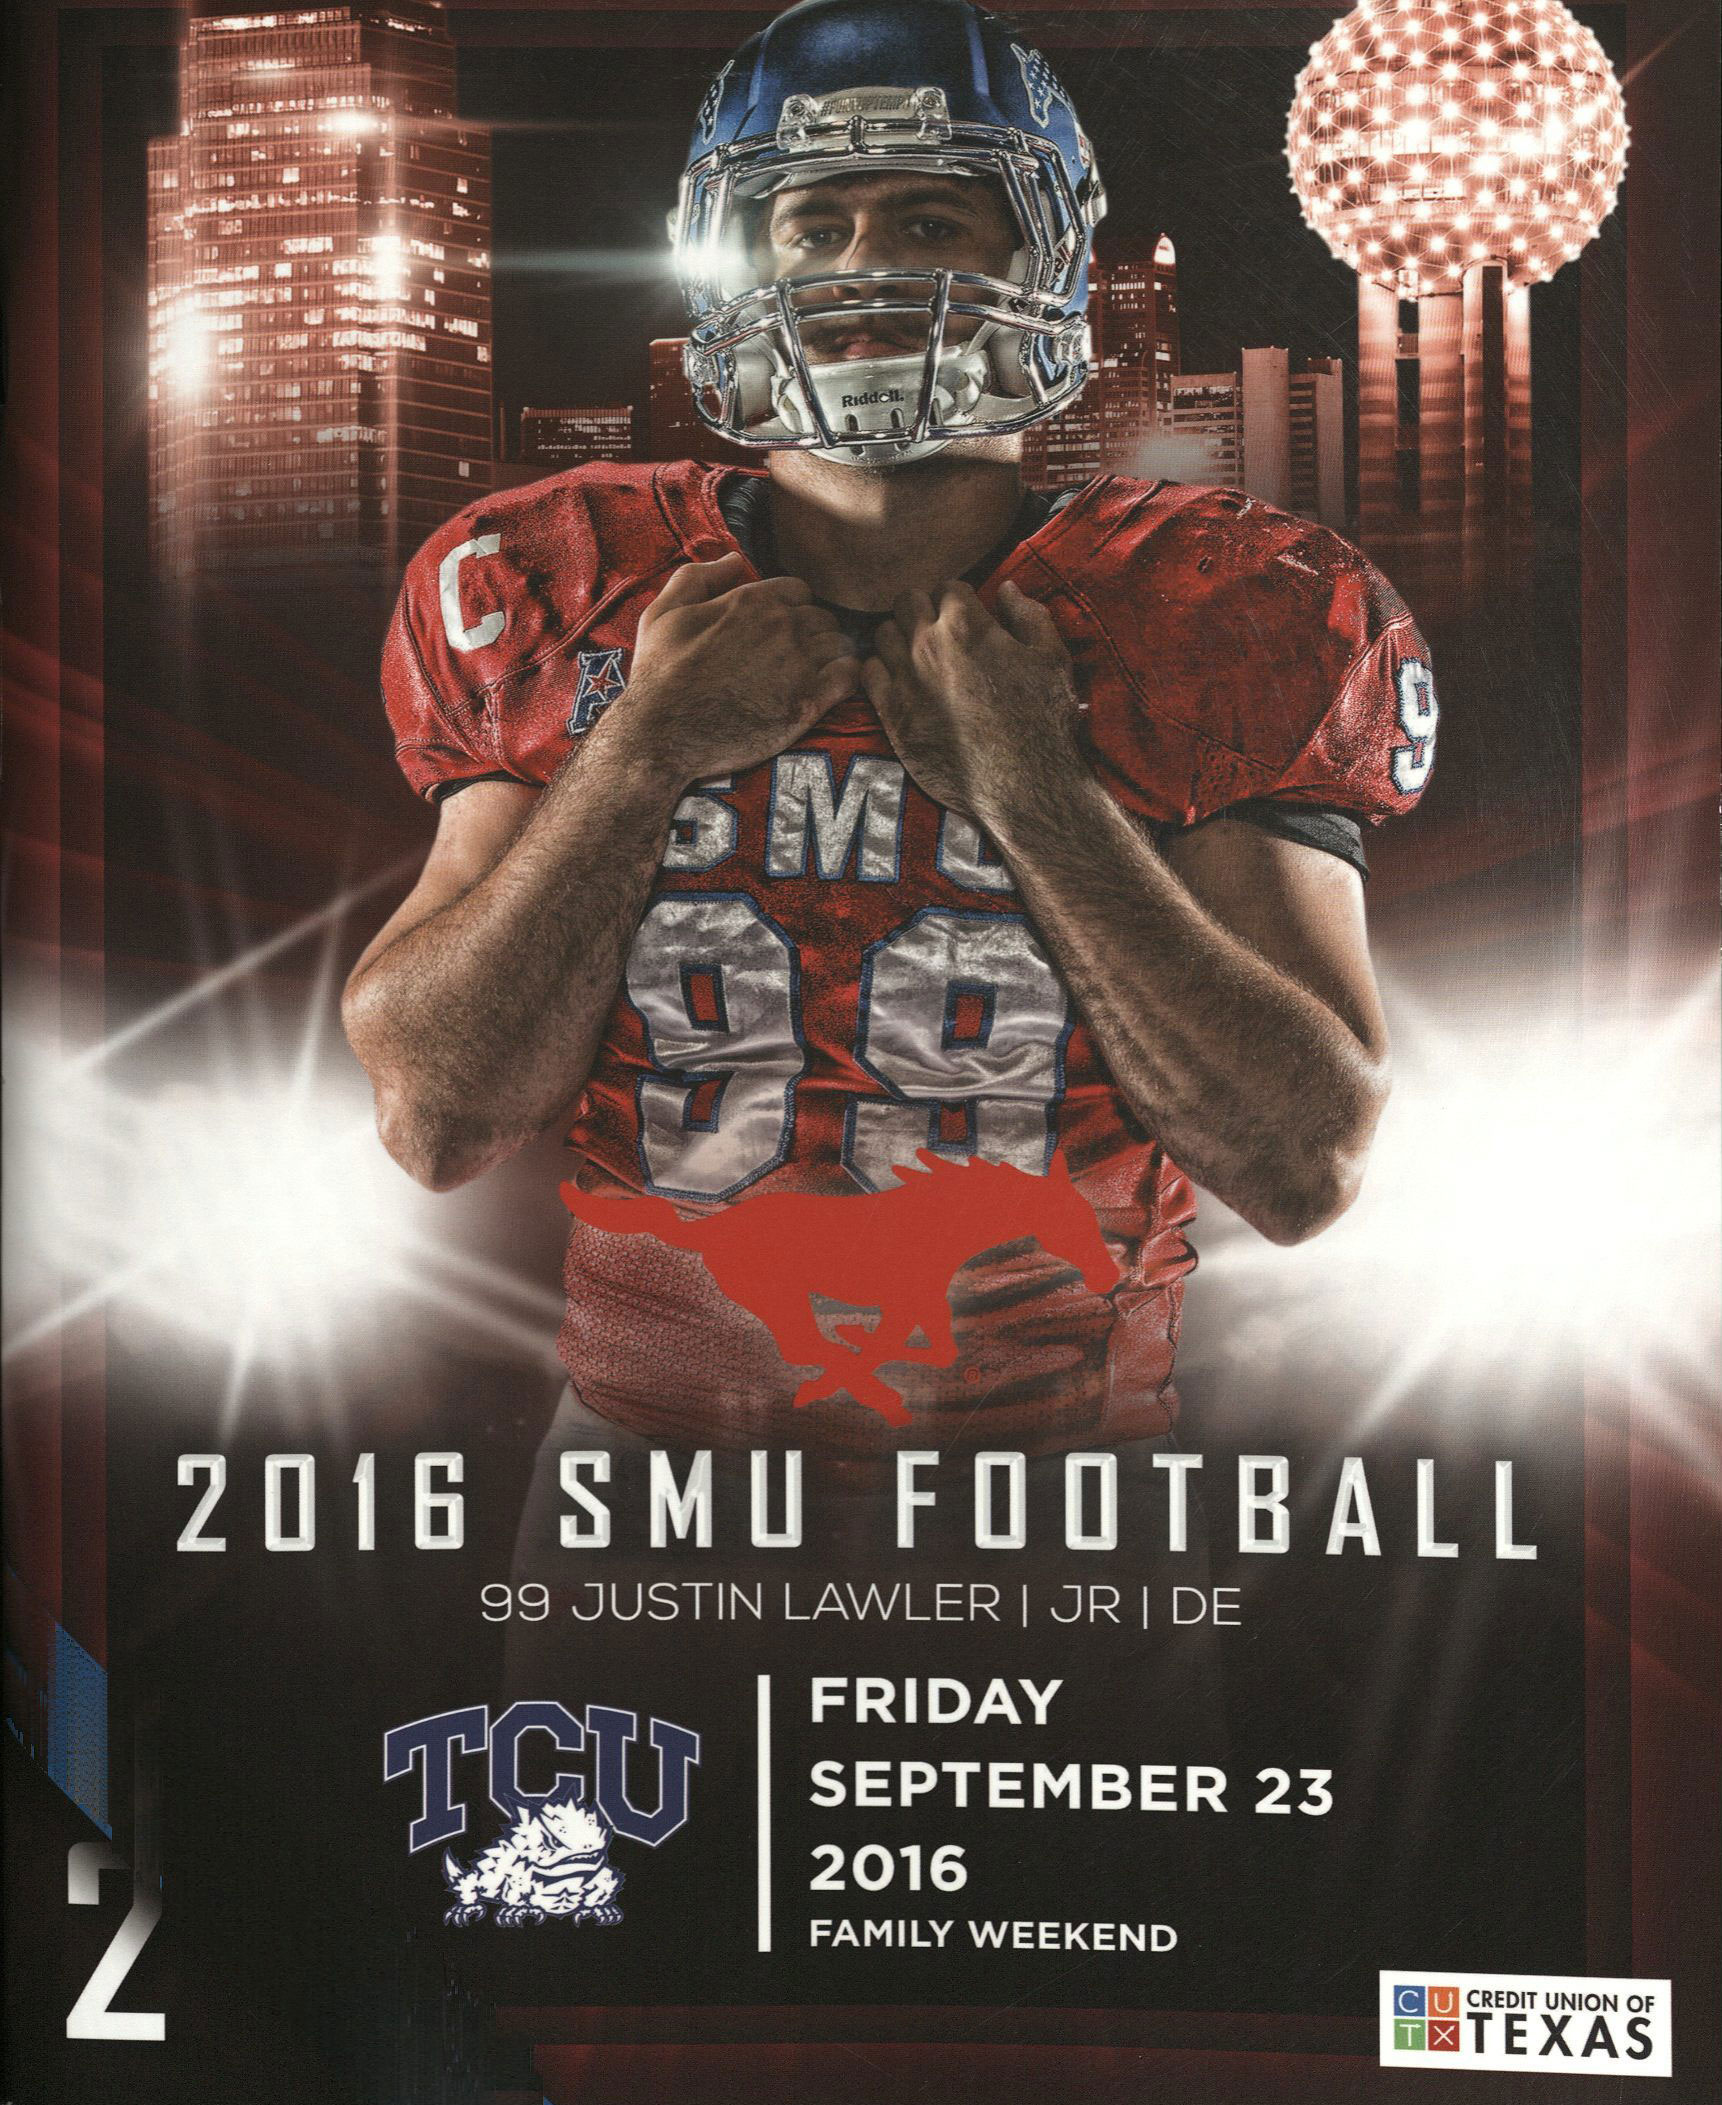 Football program from the 2016 SMU versus TCU football game.